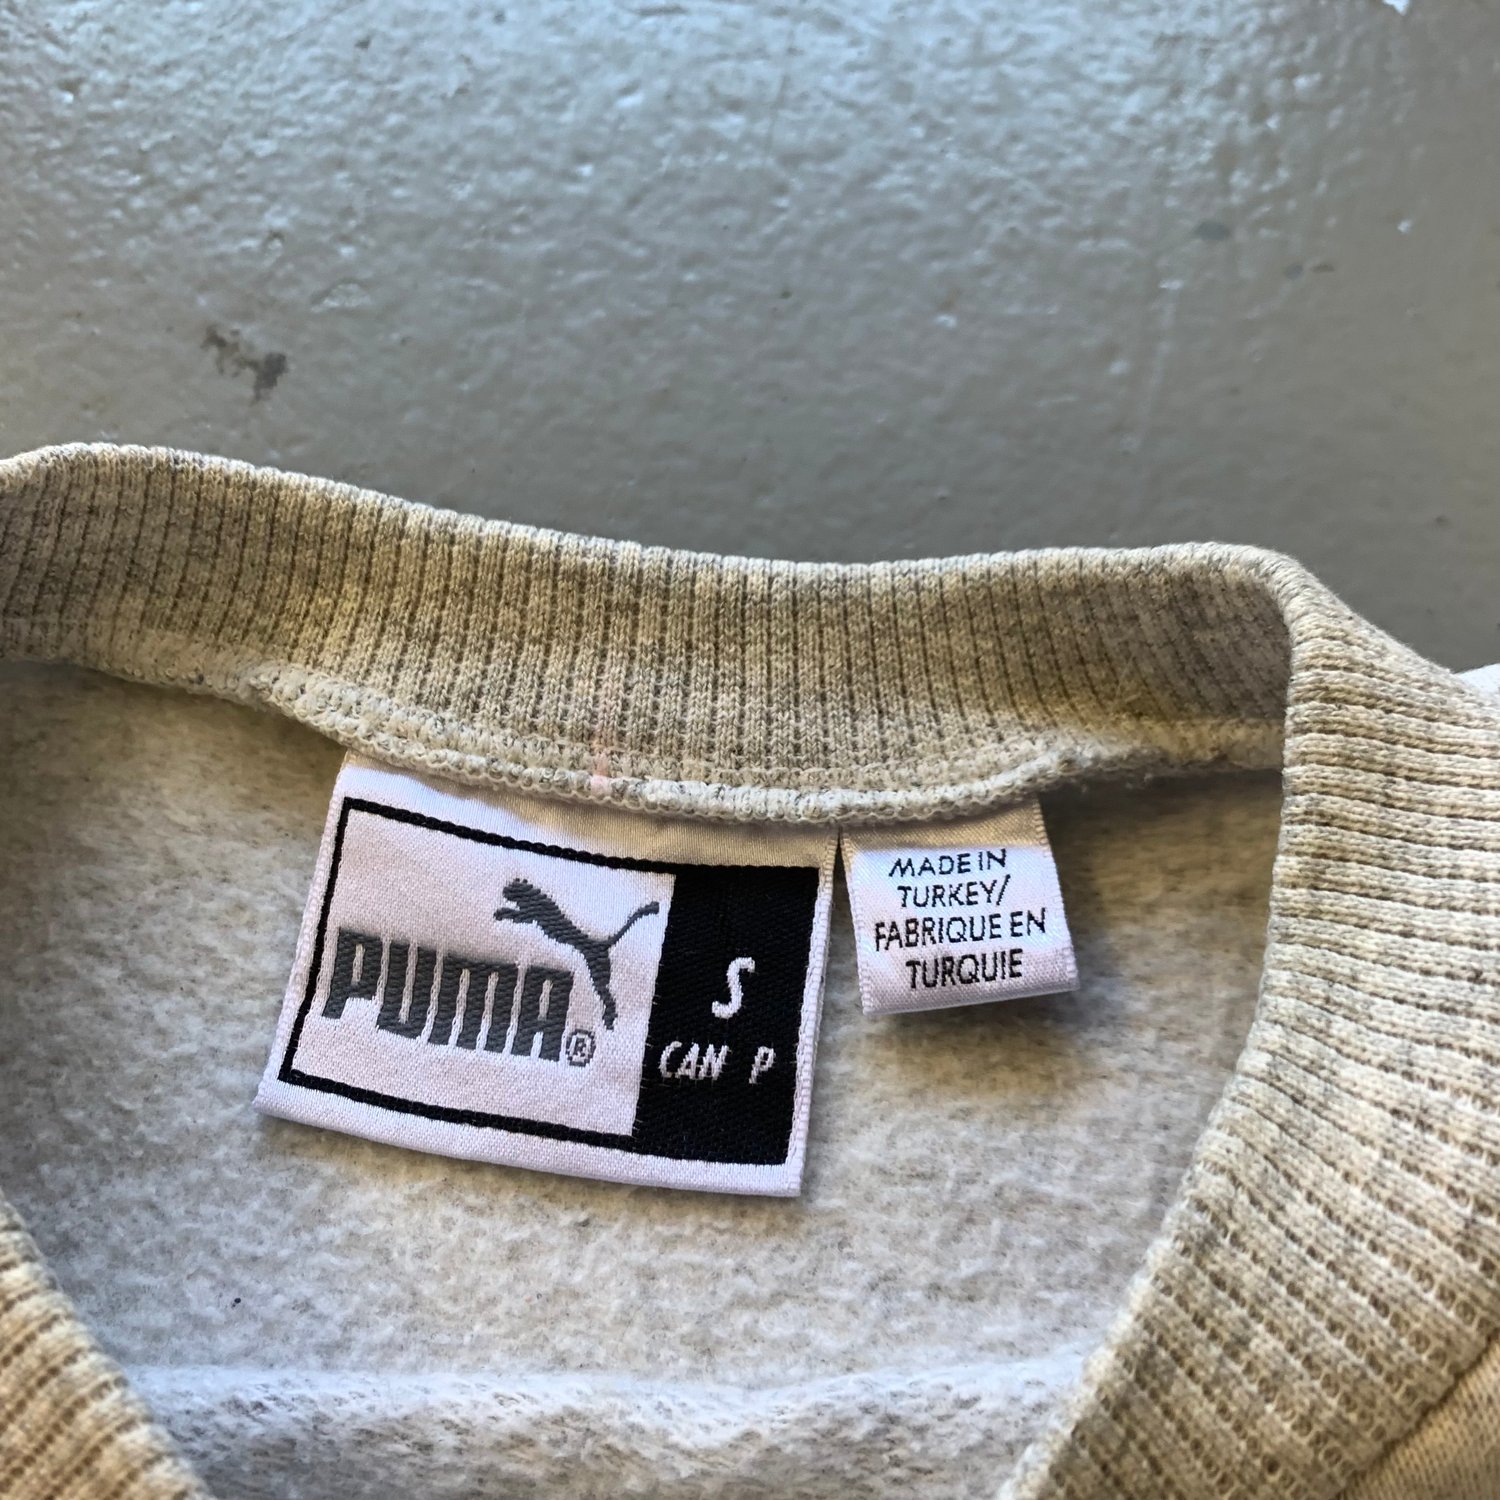 Image of Vintage Puma rework sweatshirt size small 